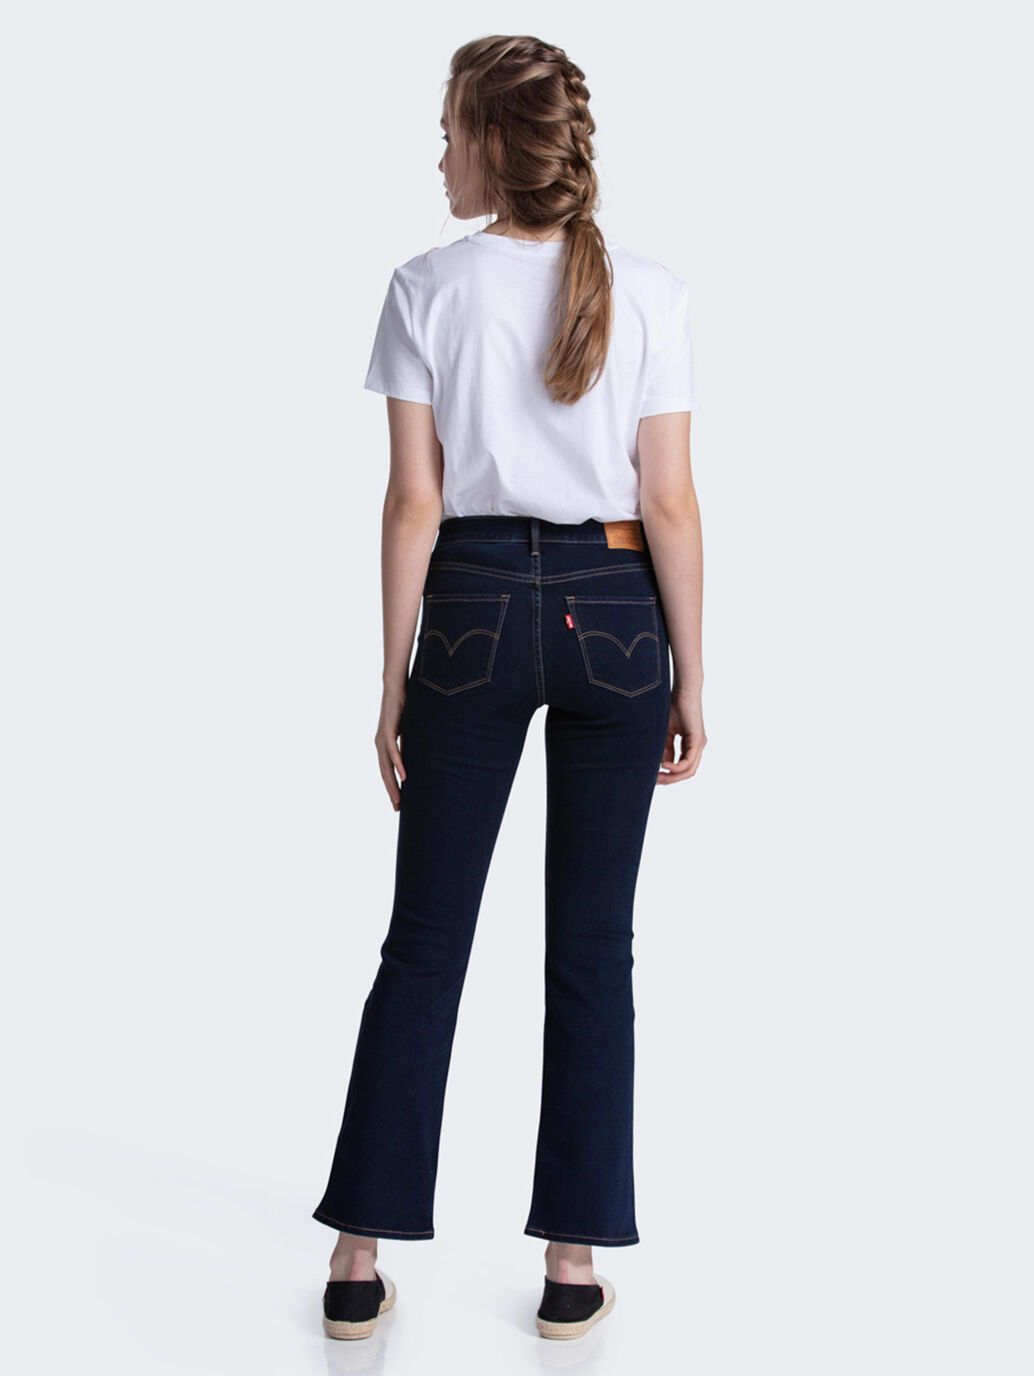 womens bootleg jeans australia